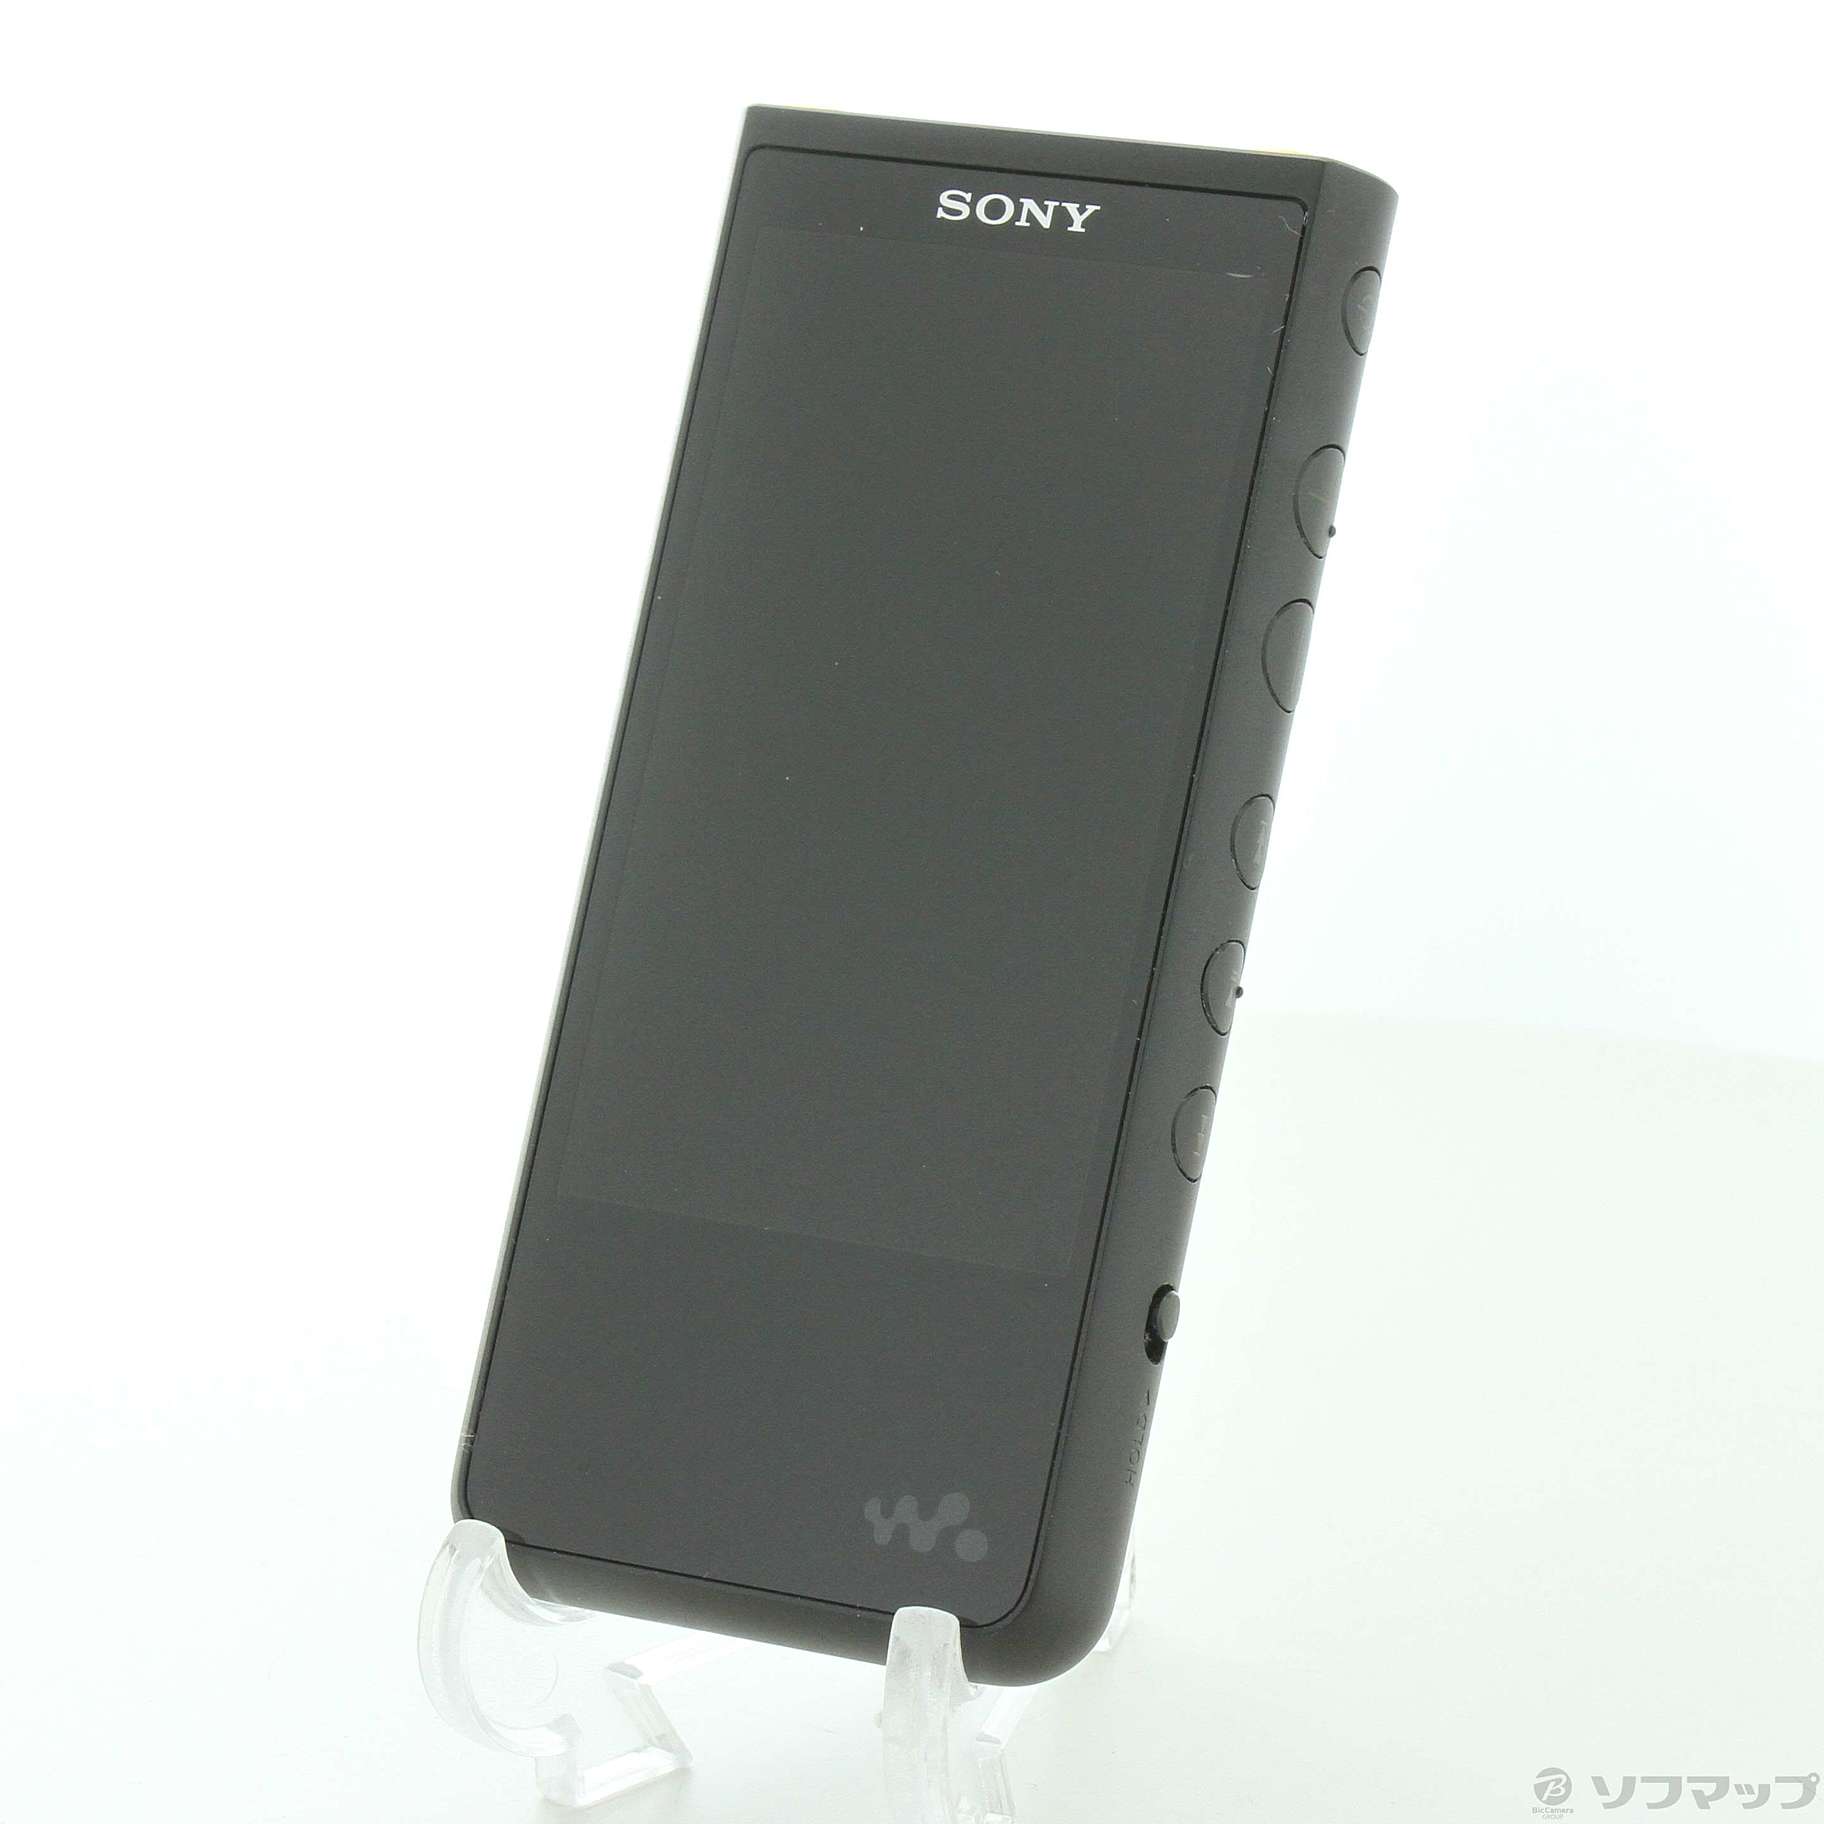 SONY WALKMAN NW-ZX507 ブラック 美品